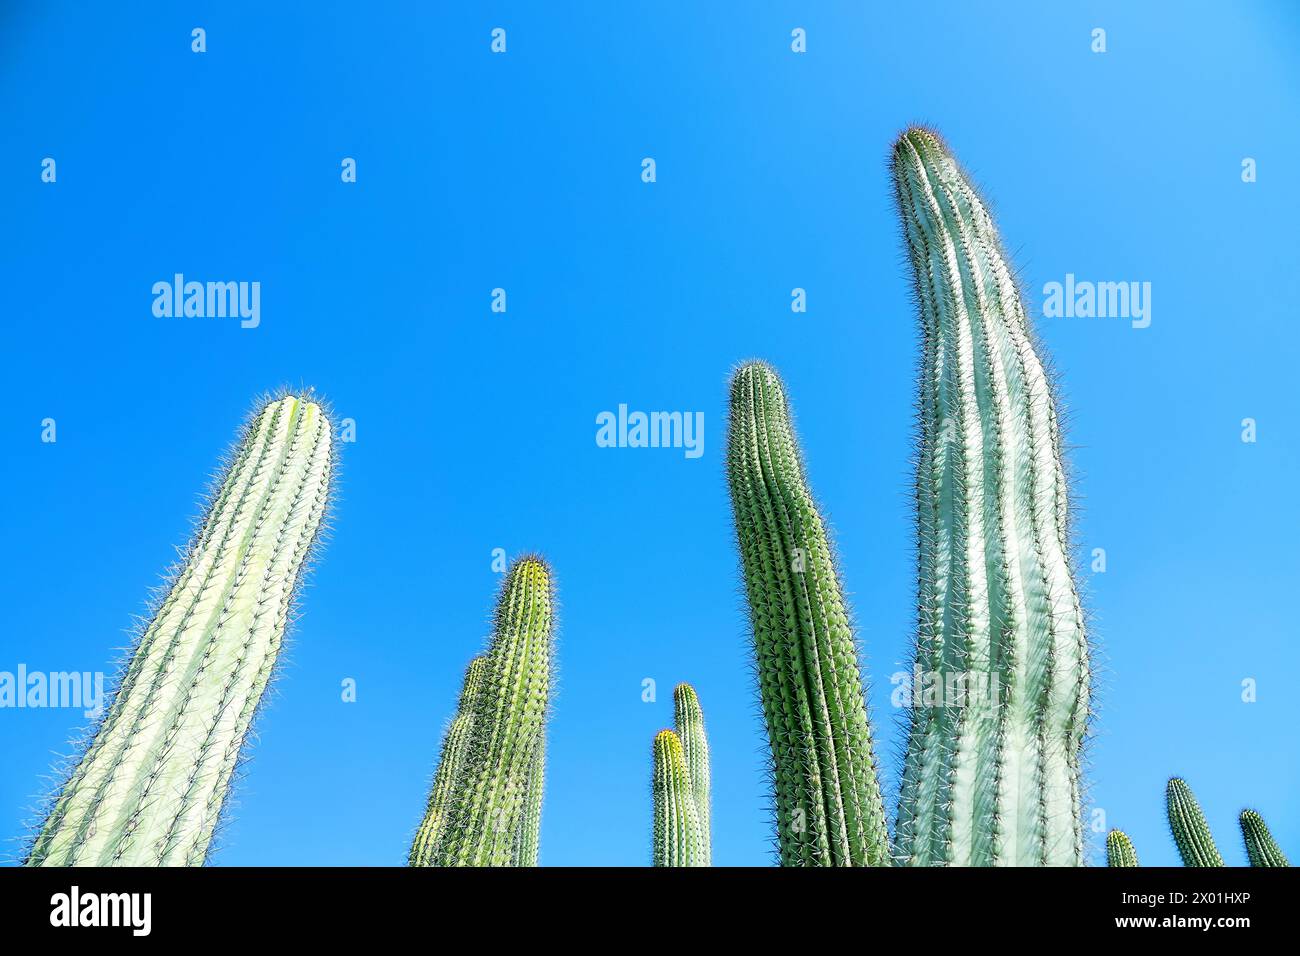 Pachycereus pringlei (noto anche come gigante messicano cardon o cactus elefante). Parco nel deserto di Abu Dhabi. Emirati Arabi Uniti Foto Stock